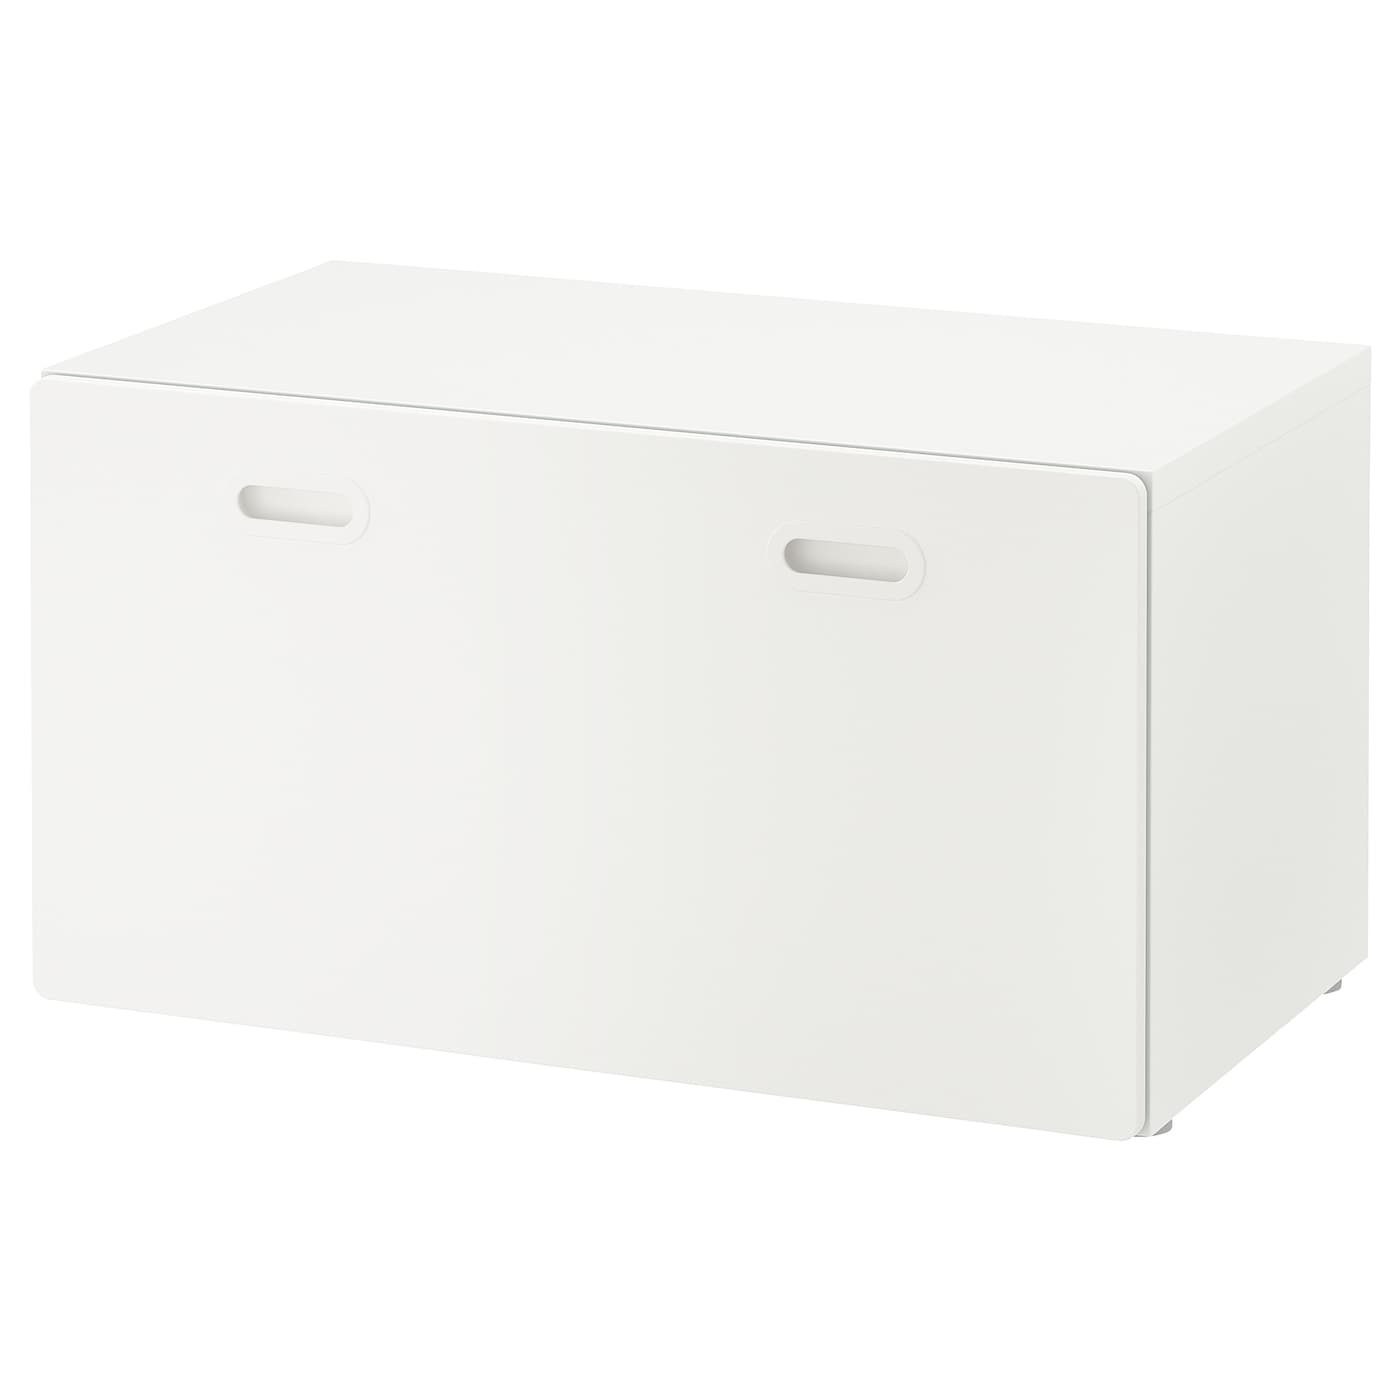 Boost mei ijzer STUVA / FRITIDS Bench with toy storage white, white - IKEAPEDIA